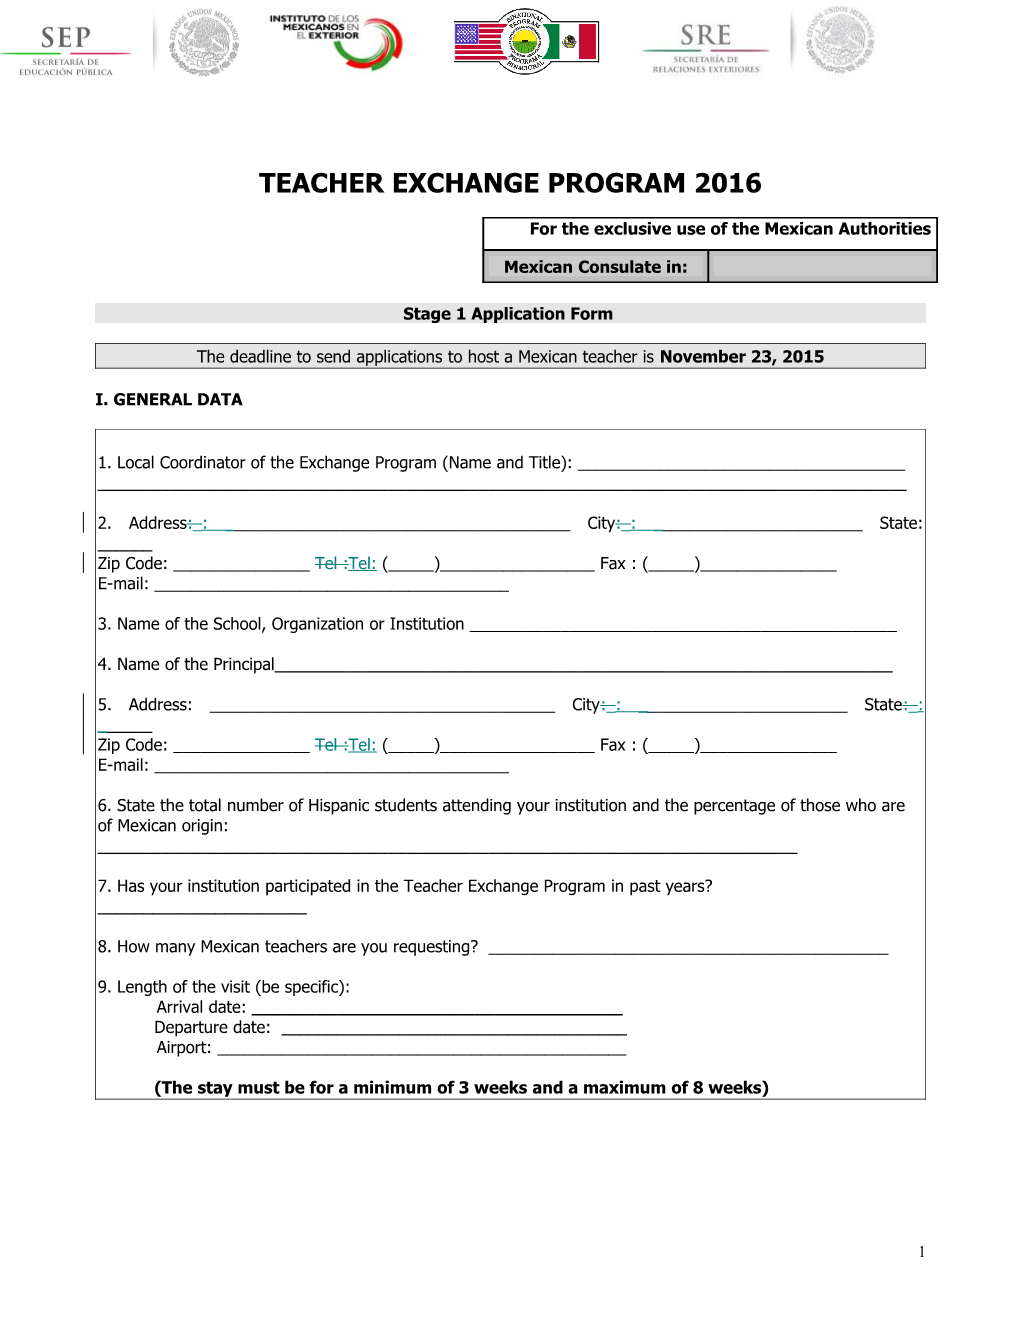 Teacher Exchange Program 2016